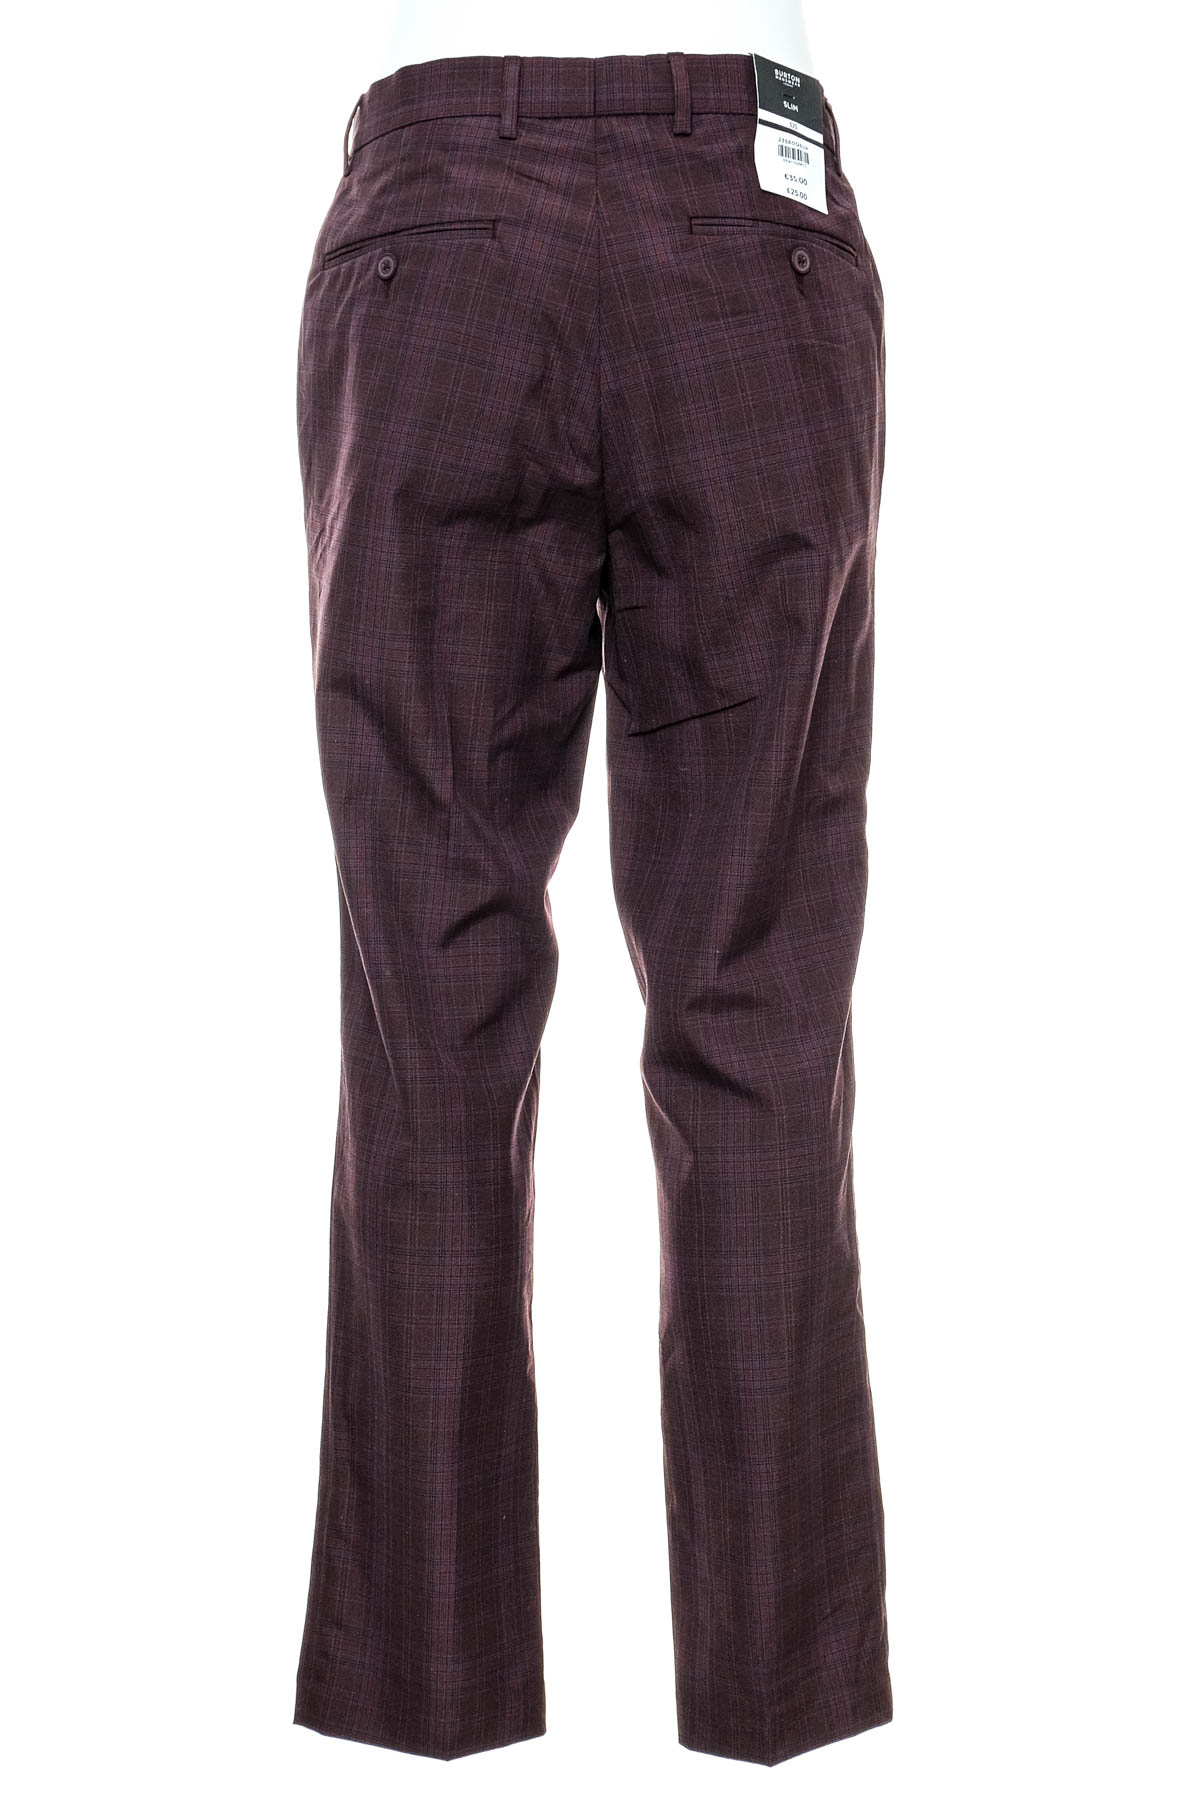 Men's trousers - Burton - 1